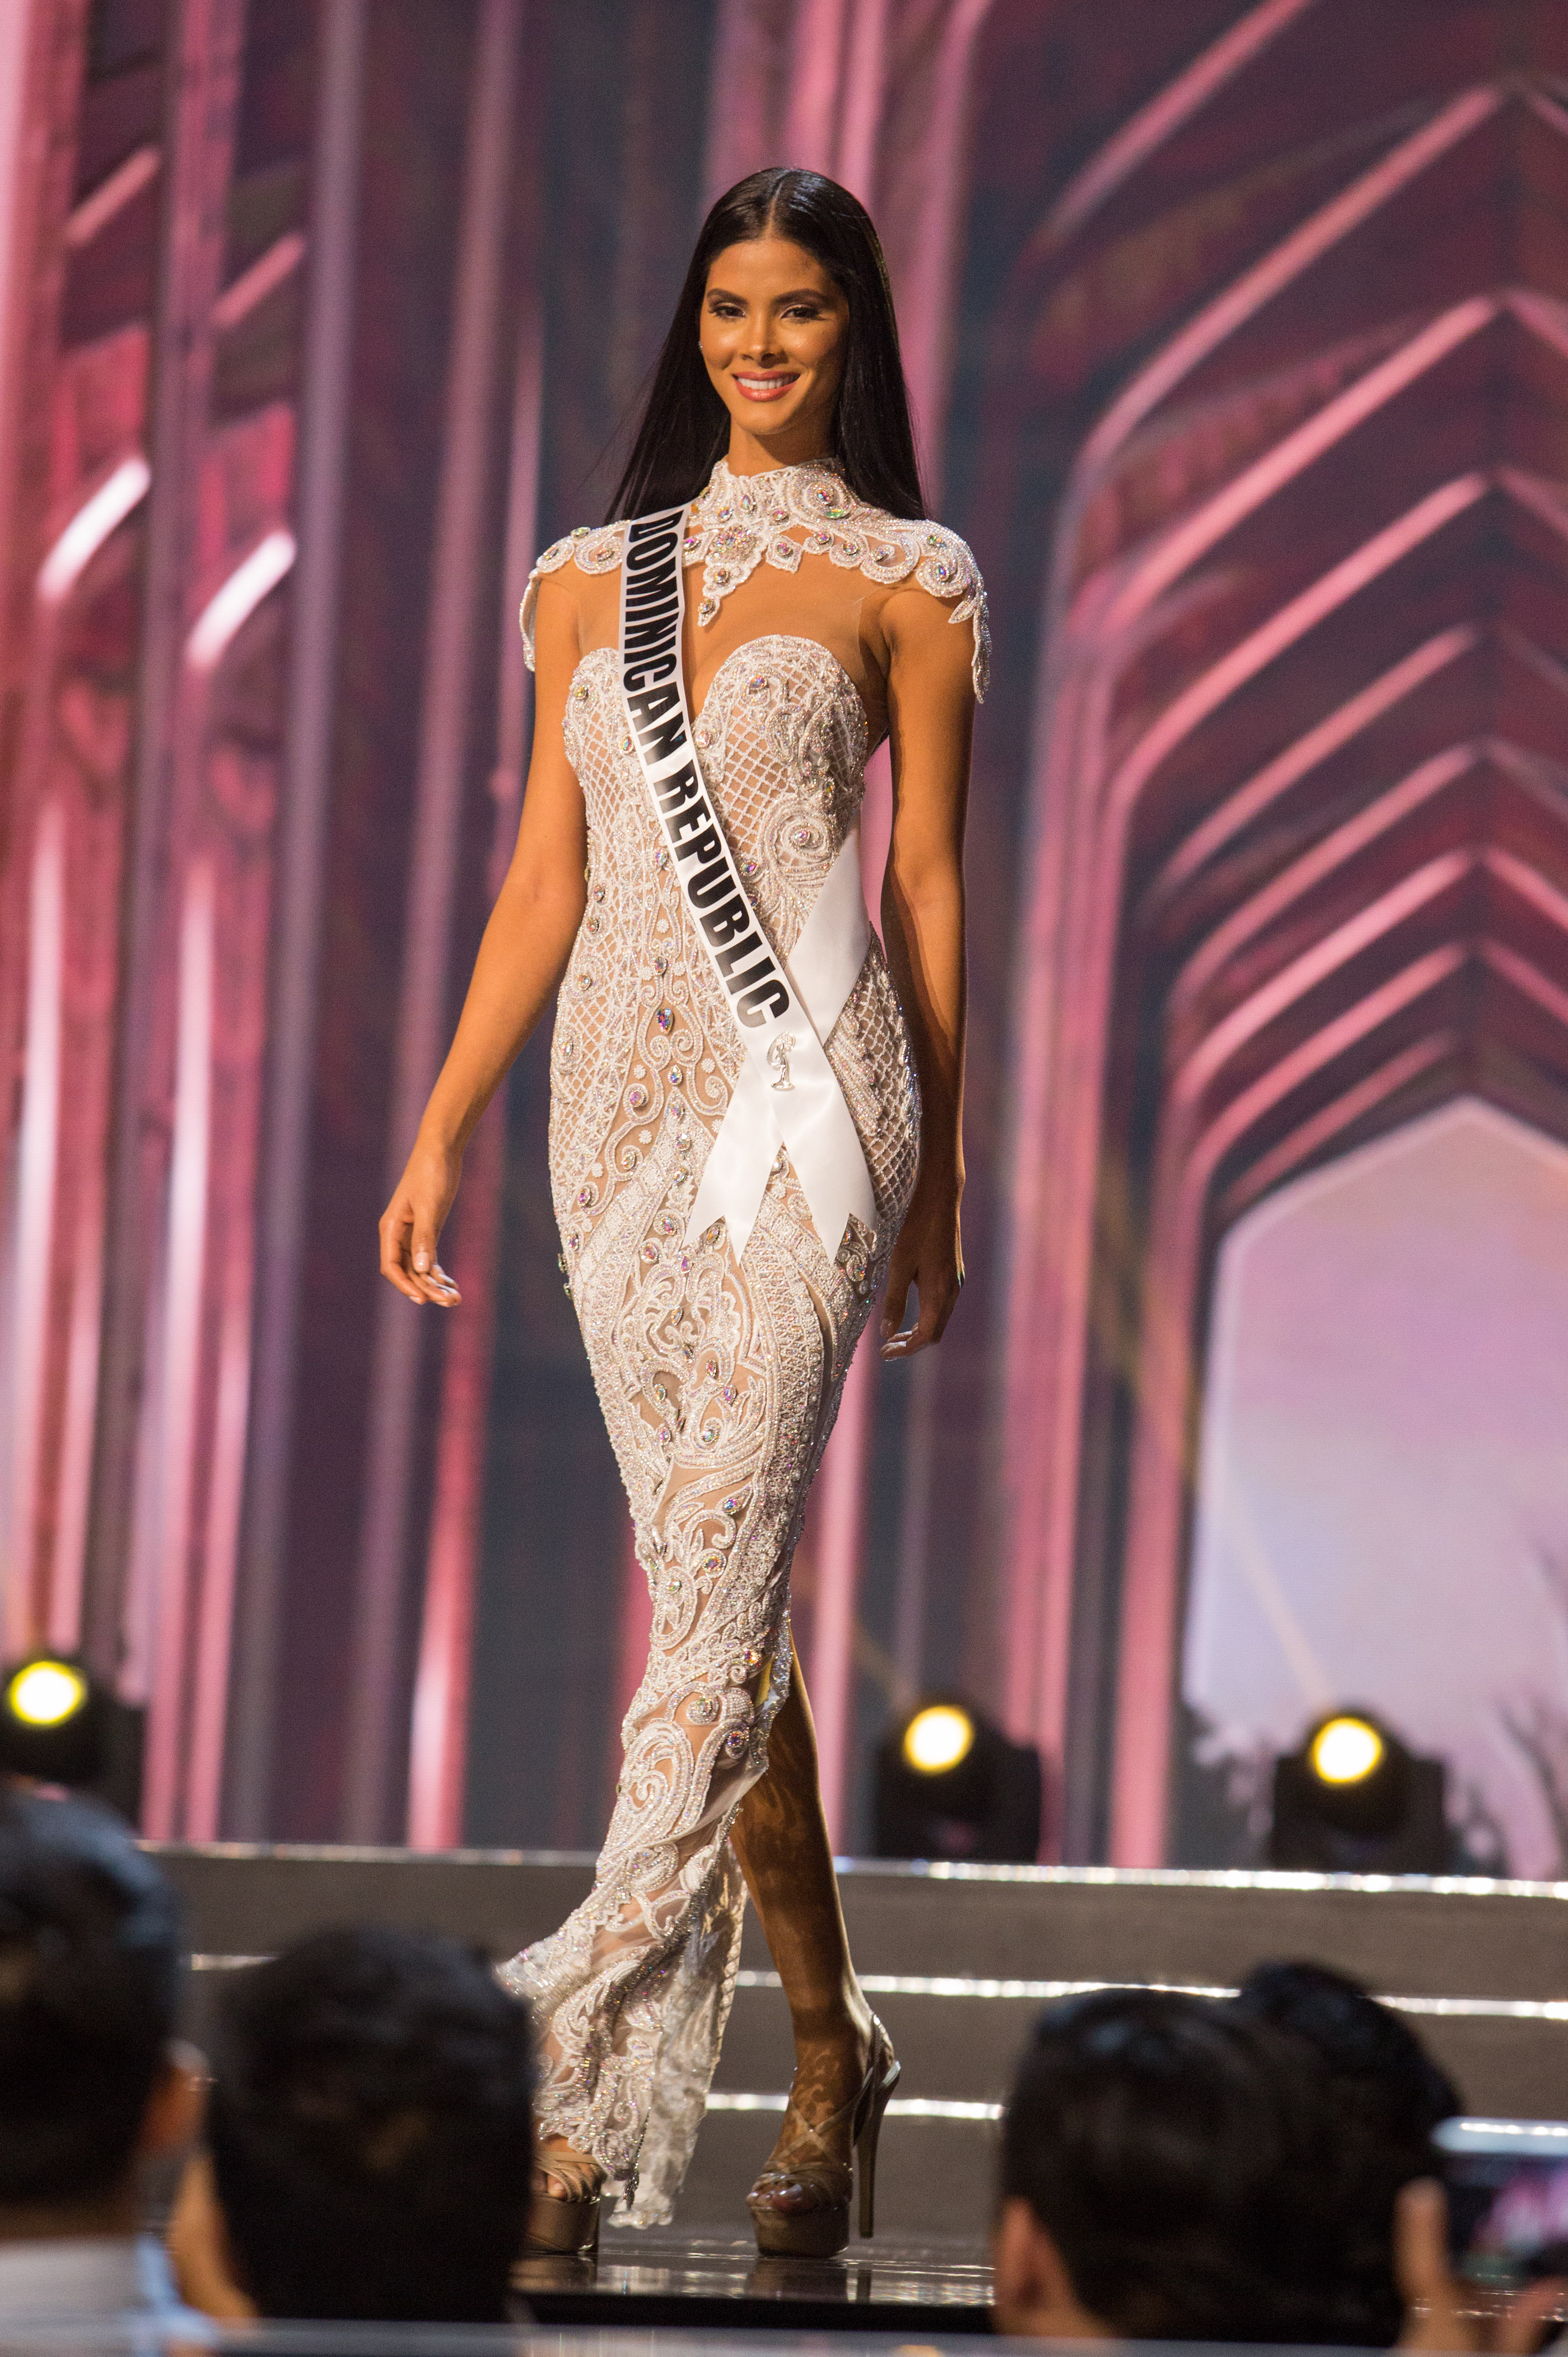 Sal Garcia, Miss Dominican Republic 2016 